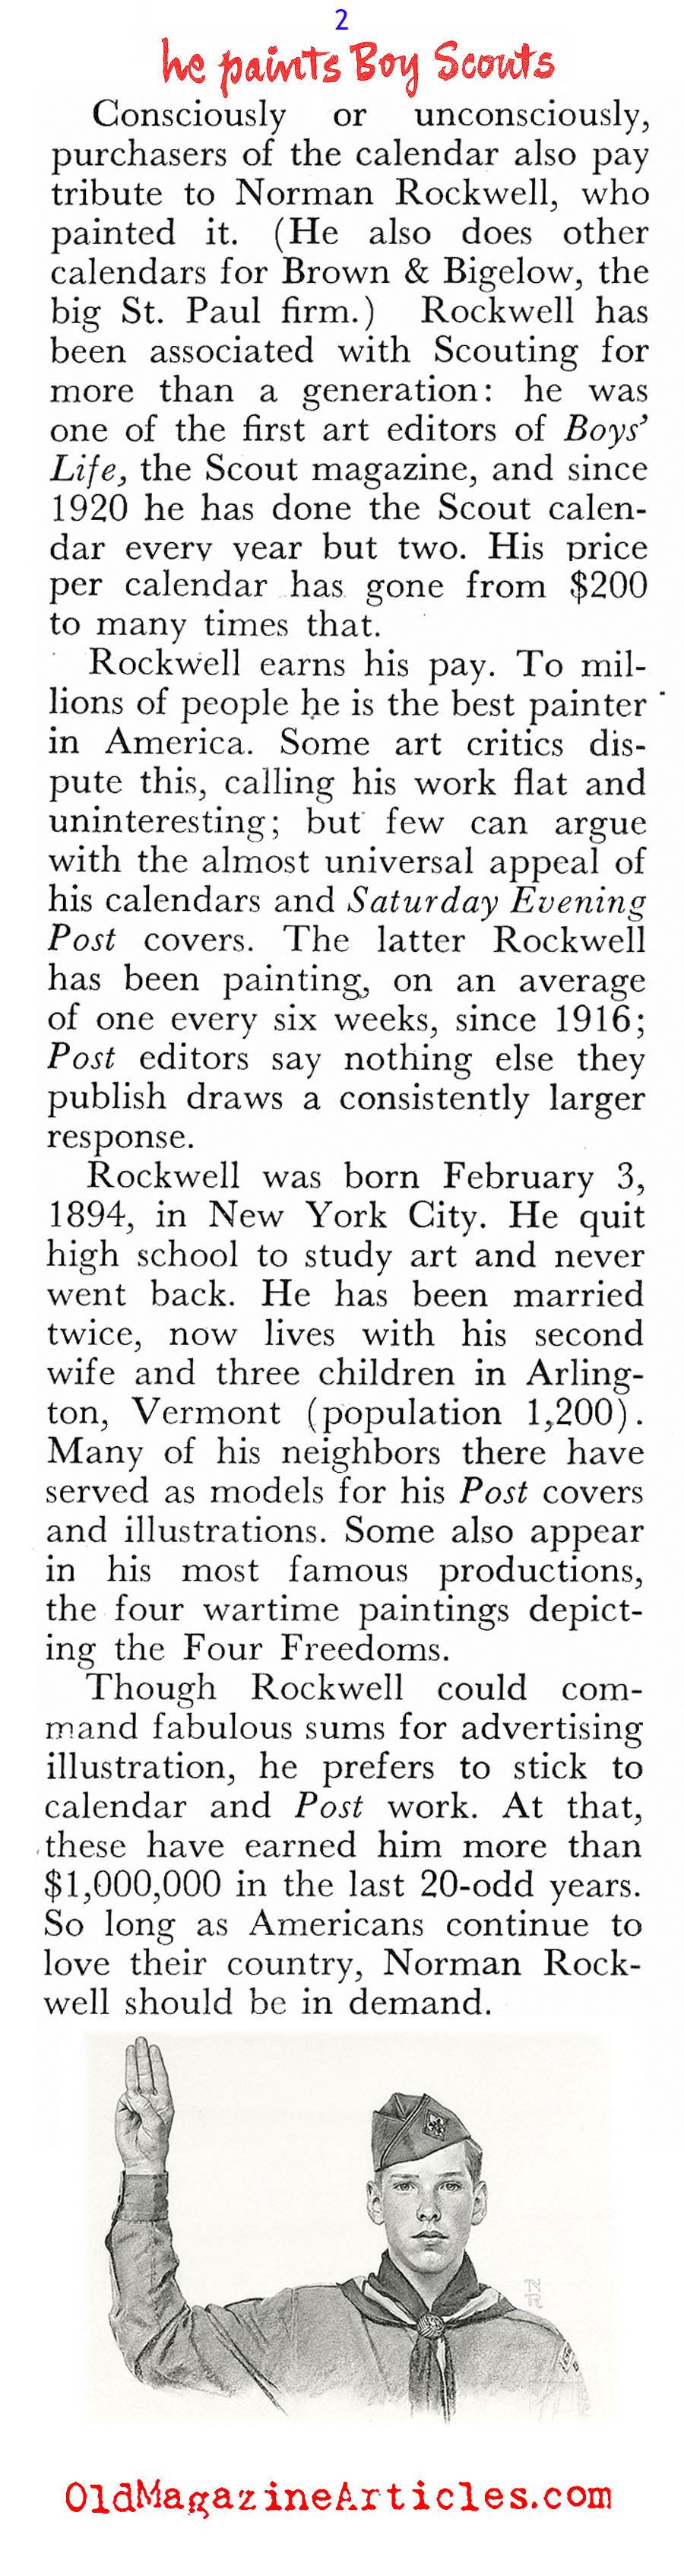 America's Favorite Illustrator (Pageant Magazine, 1947)